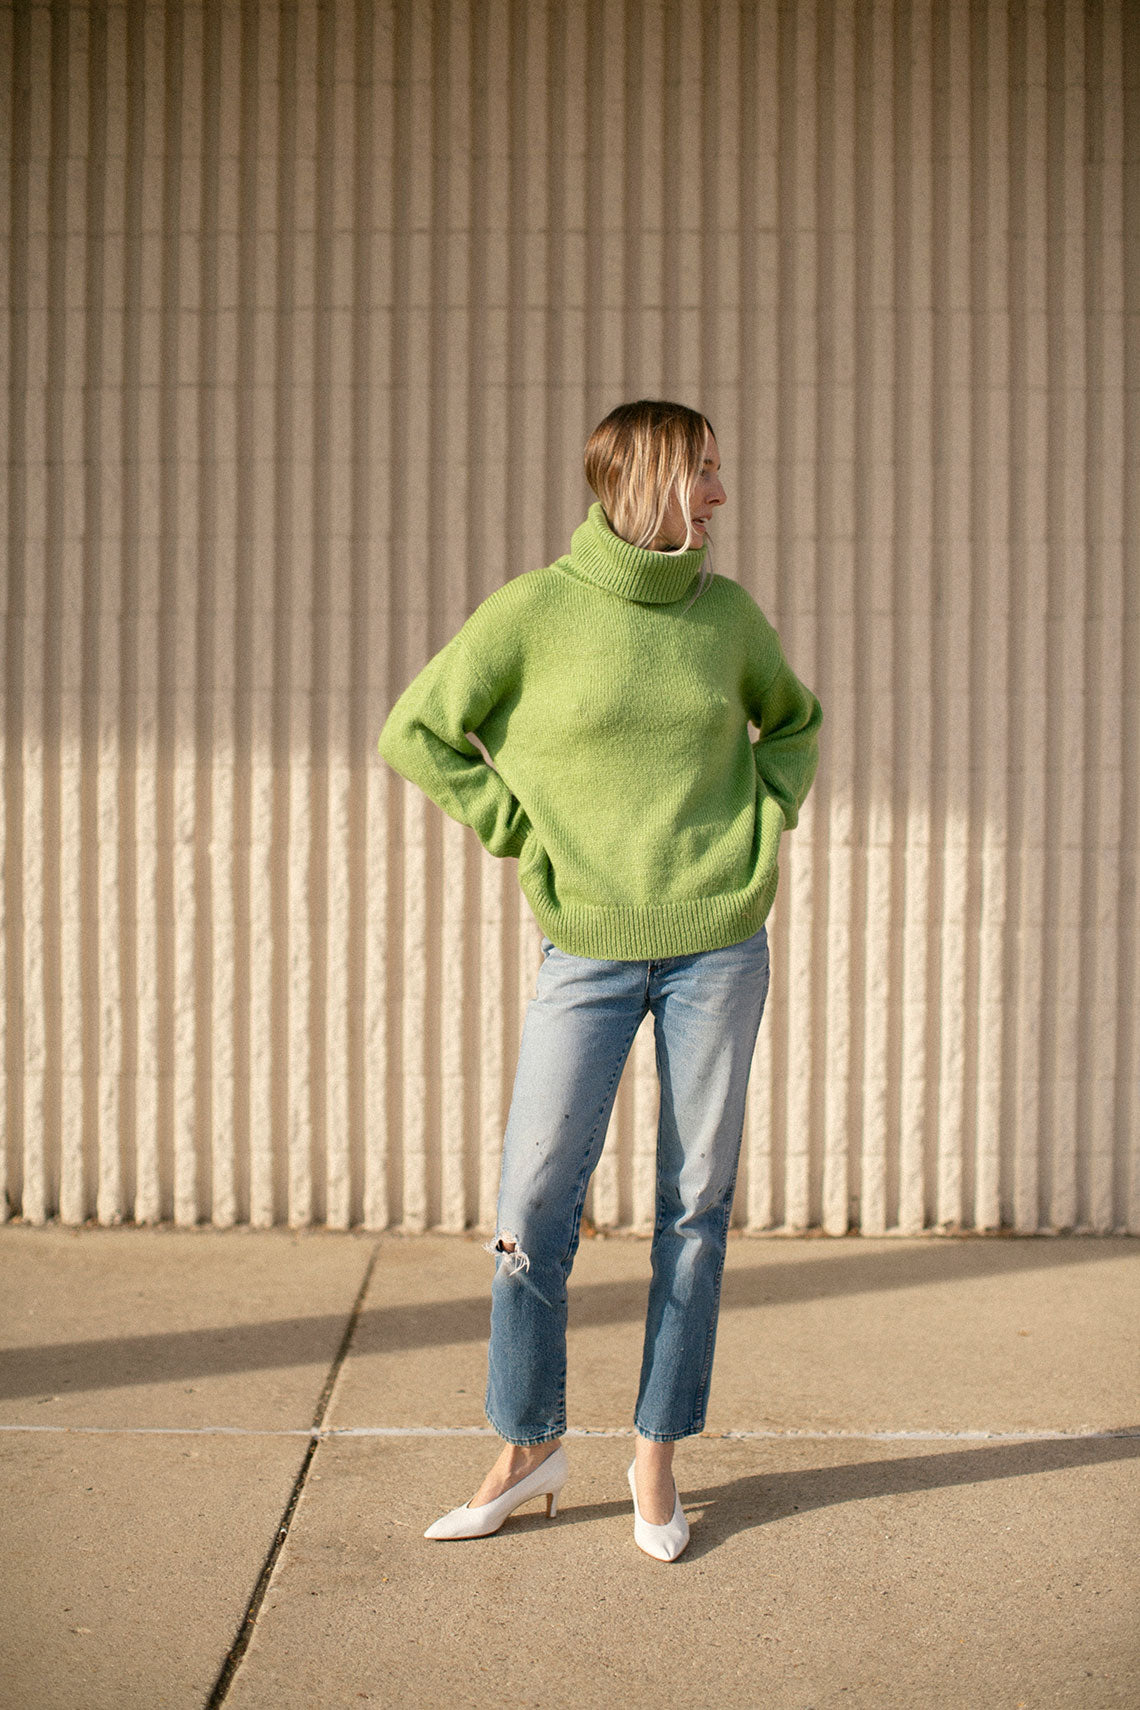 Green Calamity Sweater